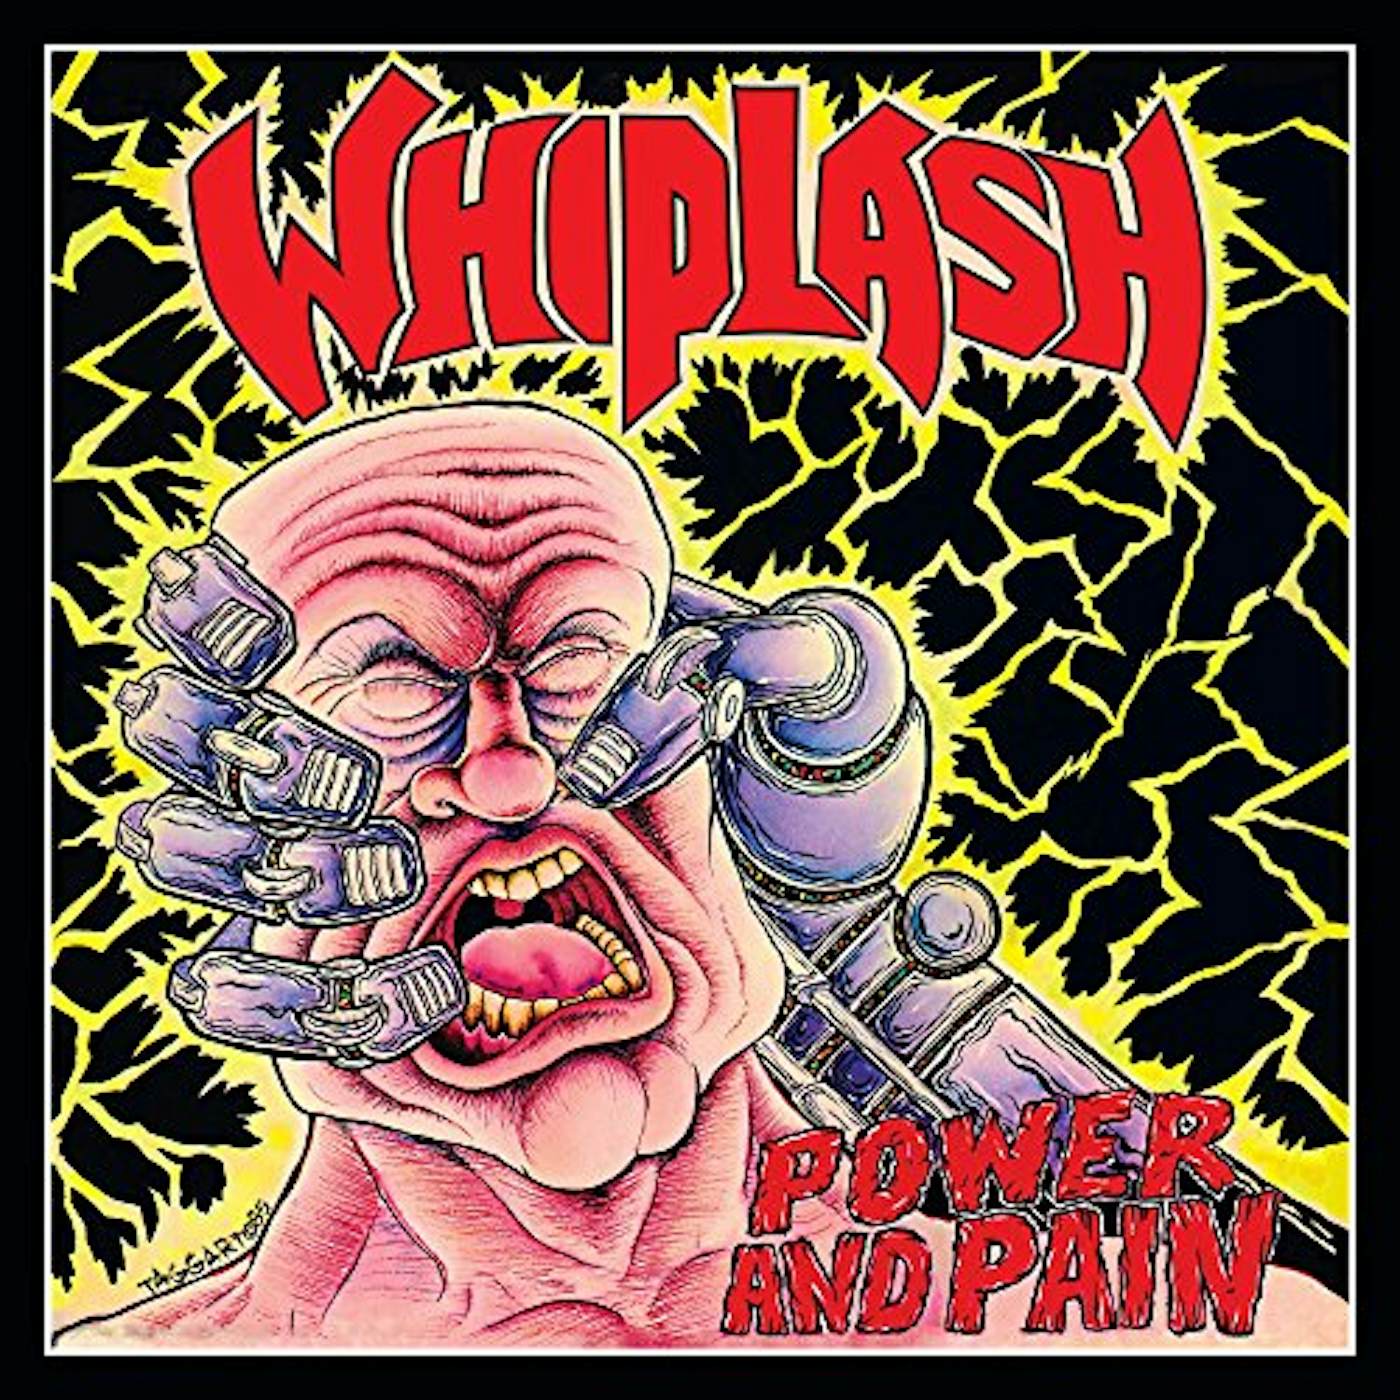 Whiplash Power And Pain Vinyl Record